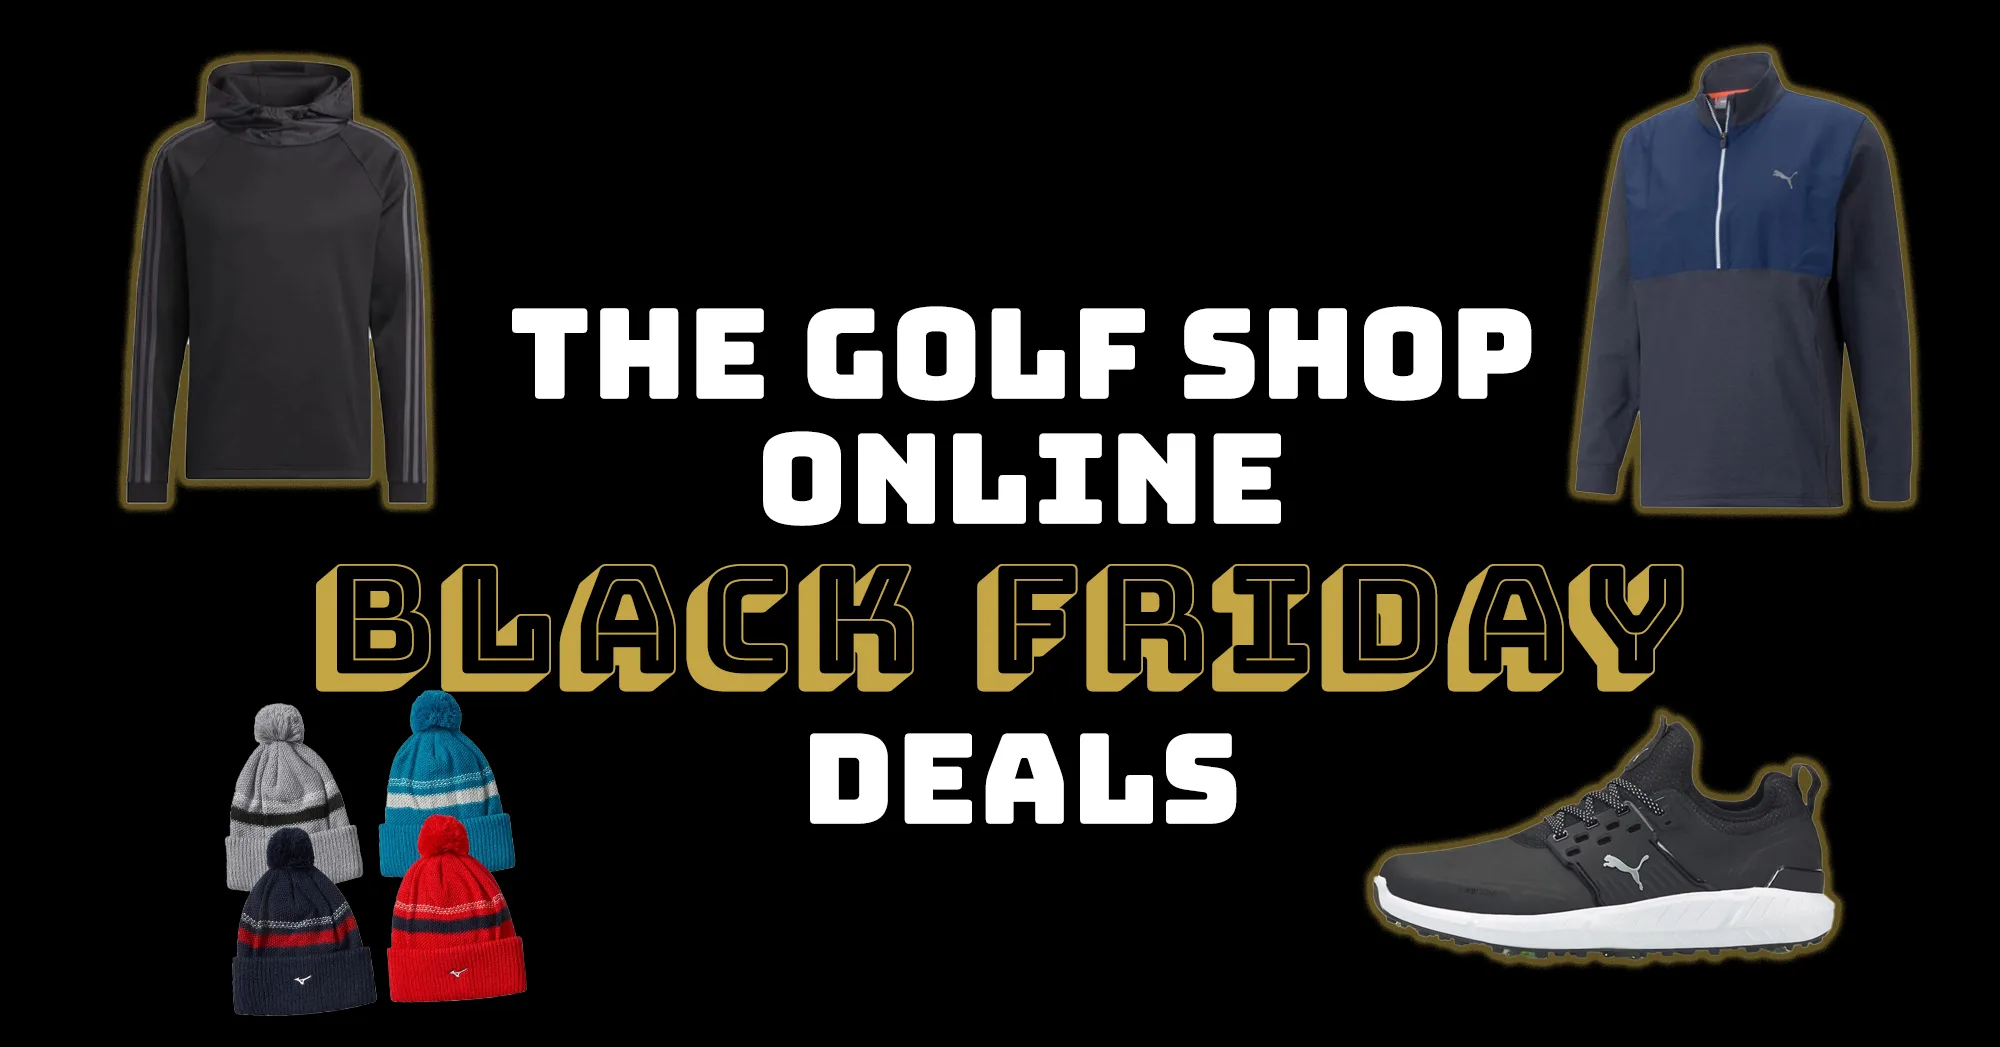 The Golf Shop Online Black Friday Golf Deals